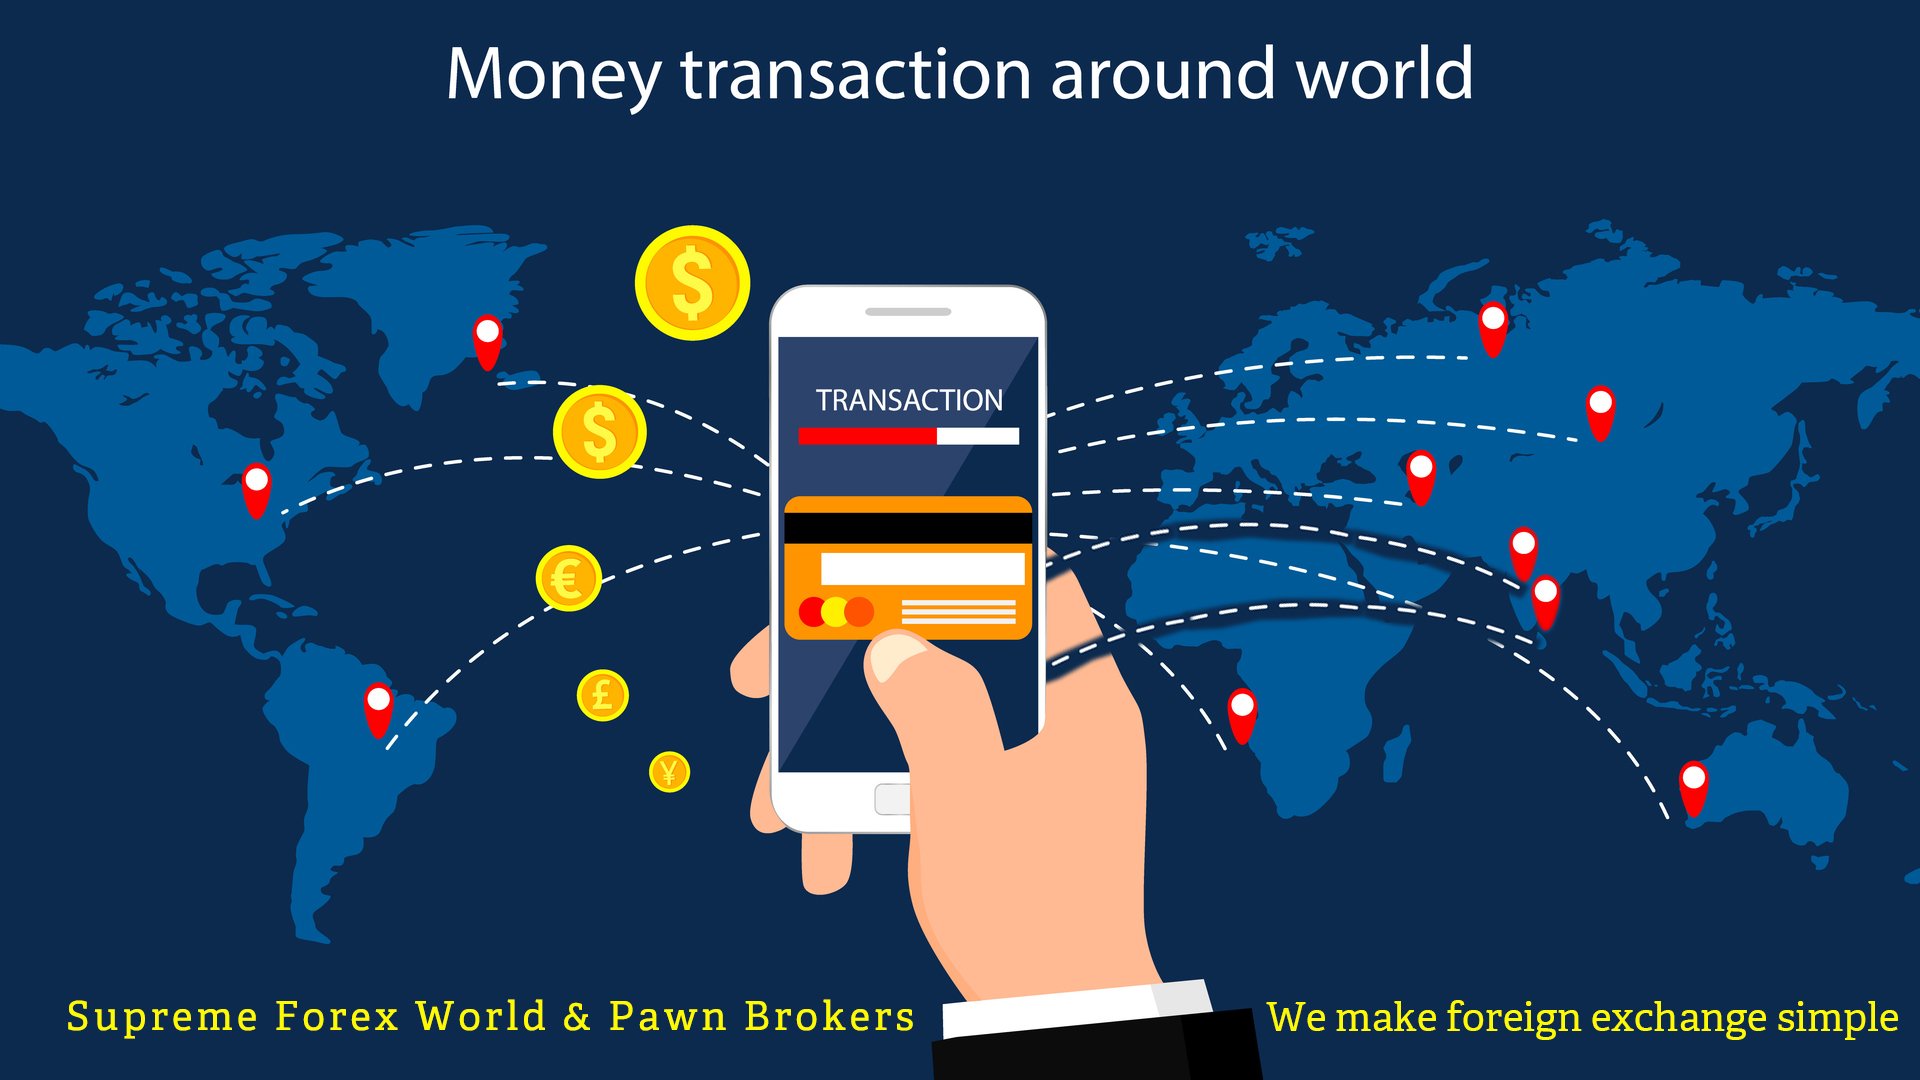 Supreme Forex World & Pawn Brokers - Blockchain Banking - HD Wallpaper 